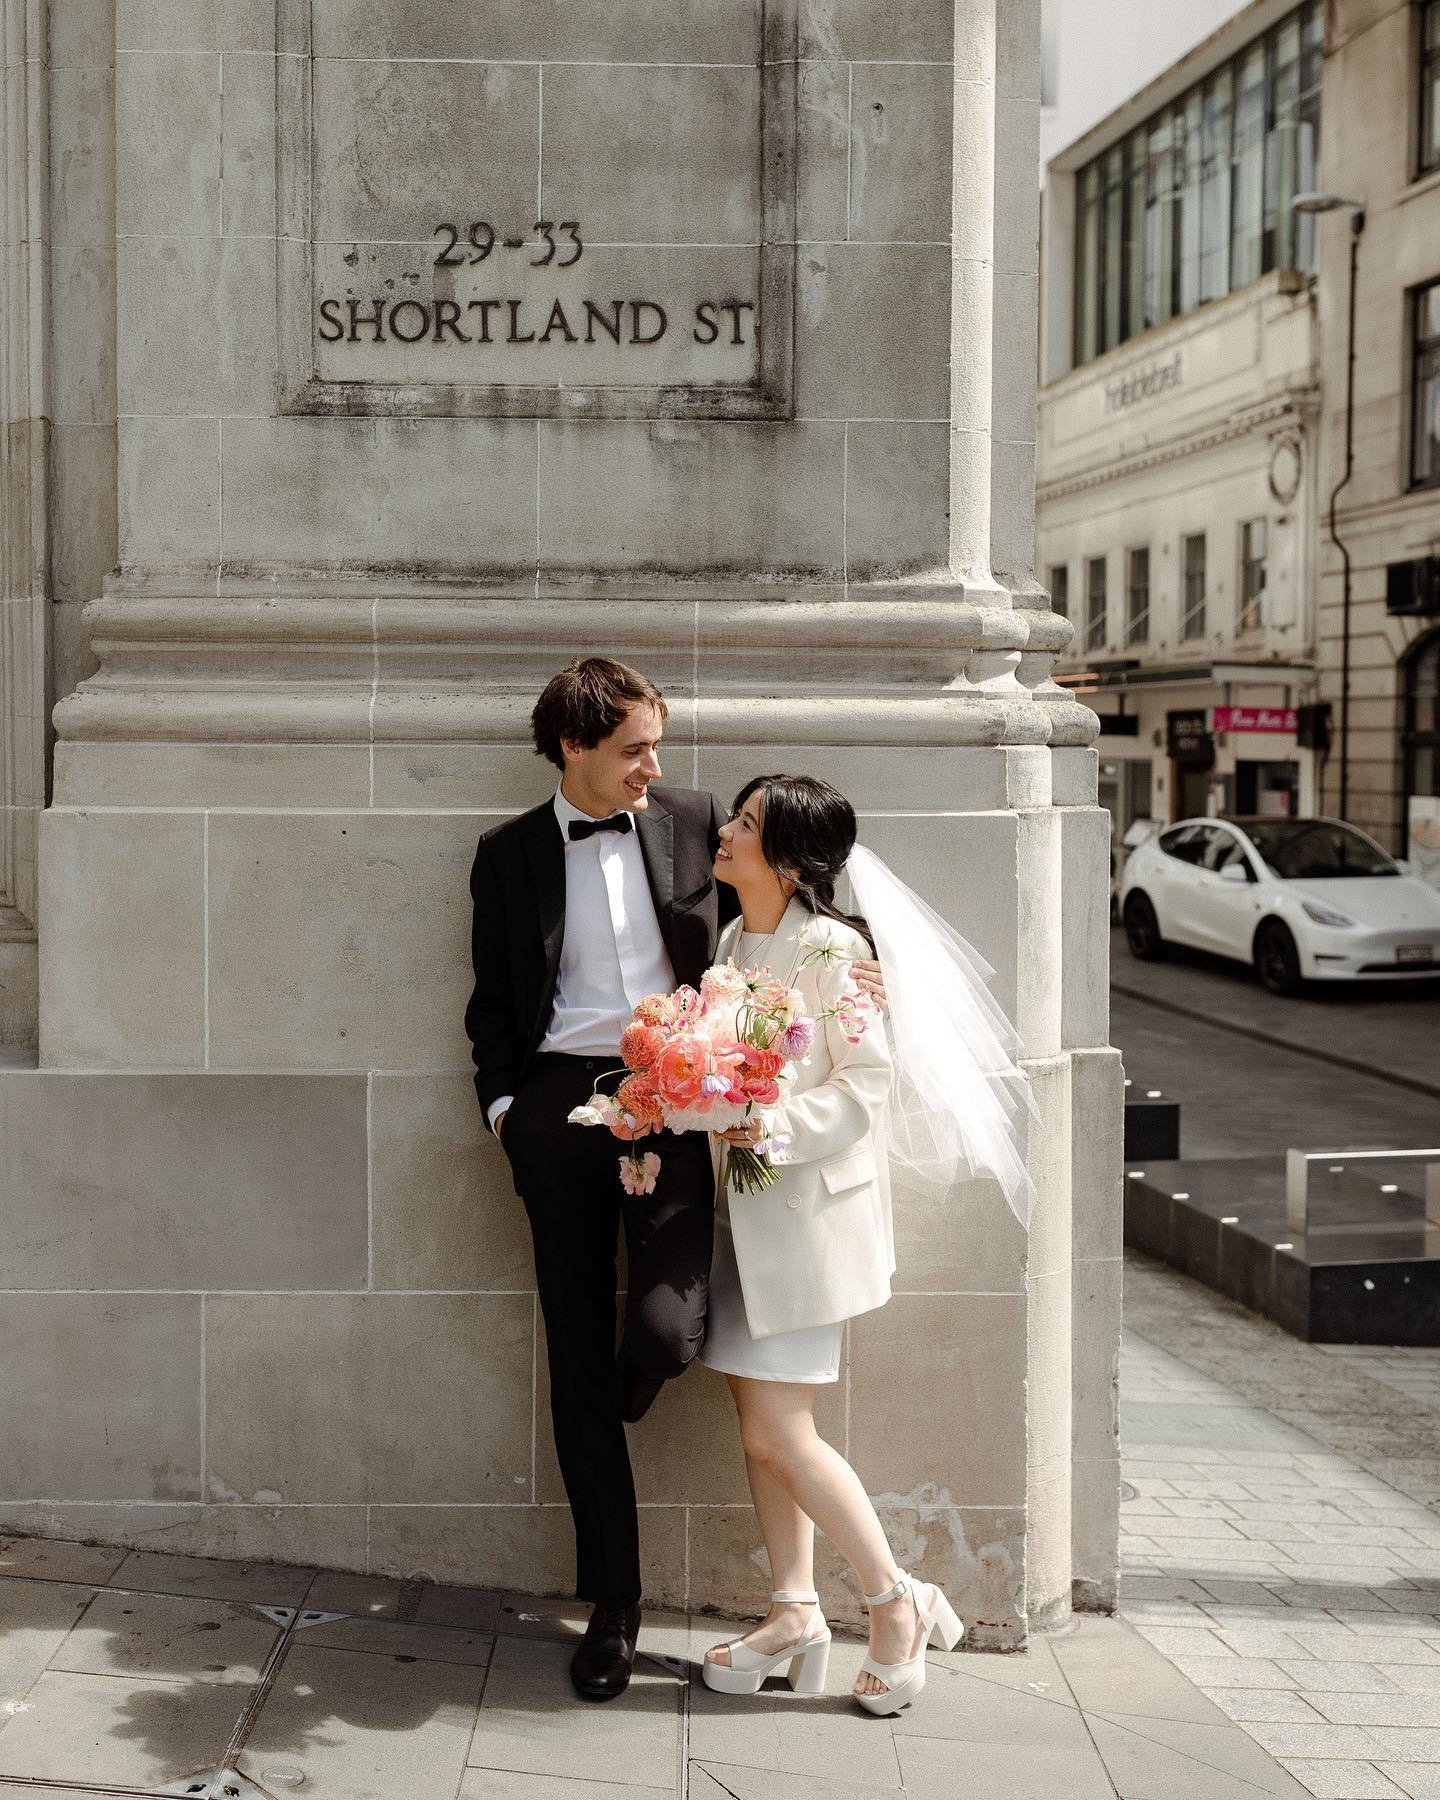 City wedding with Anni and Finn. Elegant. Vogue style.
.
.
@pilkingtons_no41 @isadiafloral @zanda_photography 
#pilkingtons #voguewedding #vogue #citywedding #aucklandcbdwedding #aucklandcitywedding #isadia #aucklanddomain #domainwedding